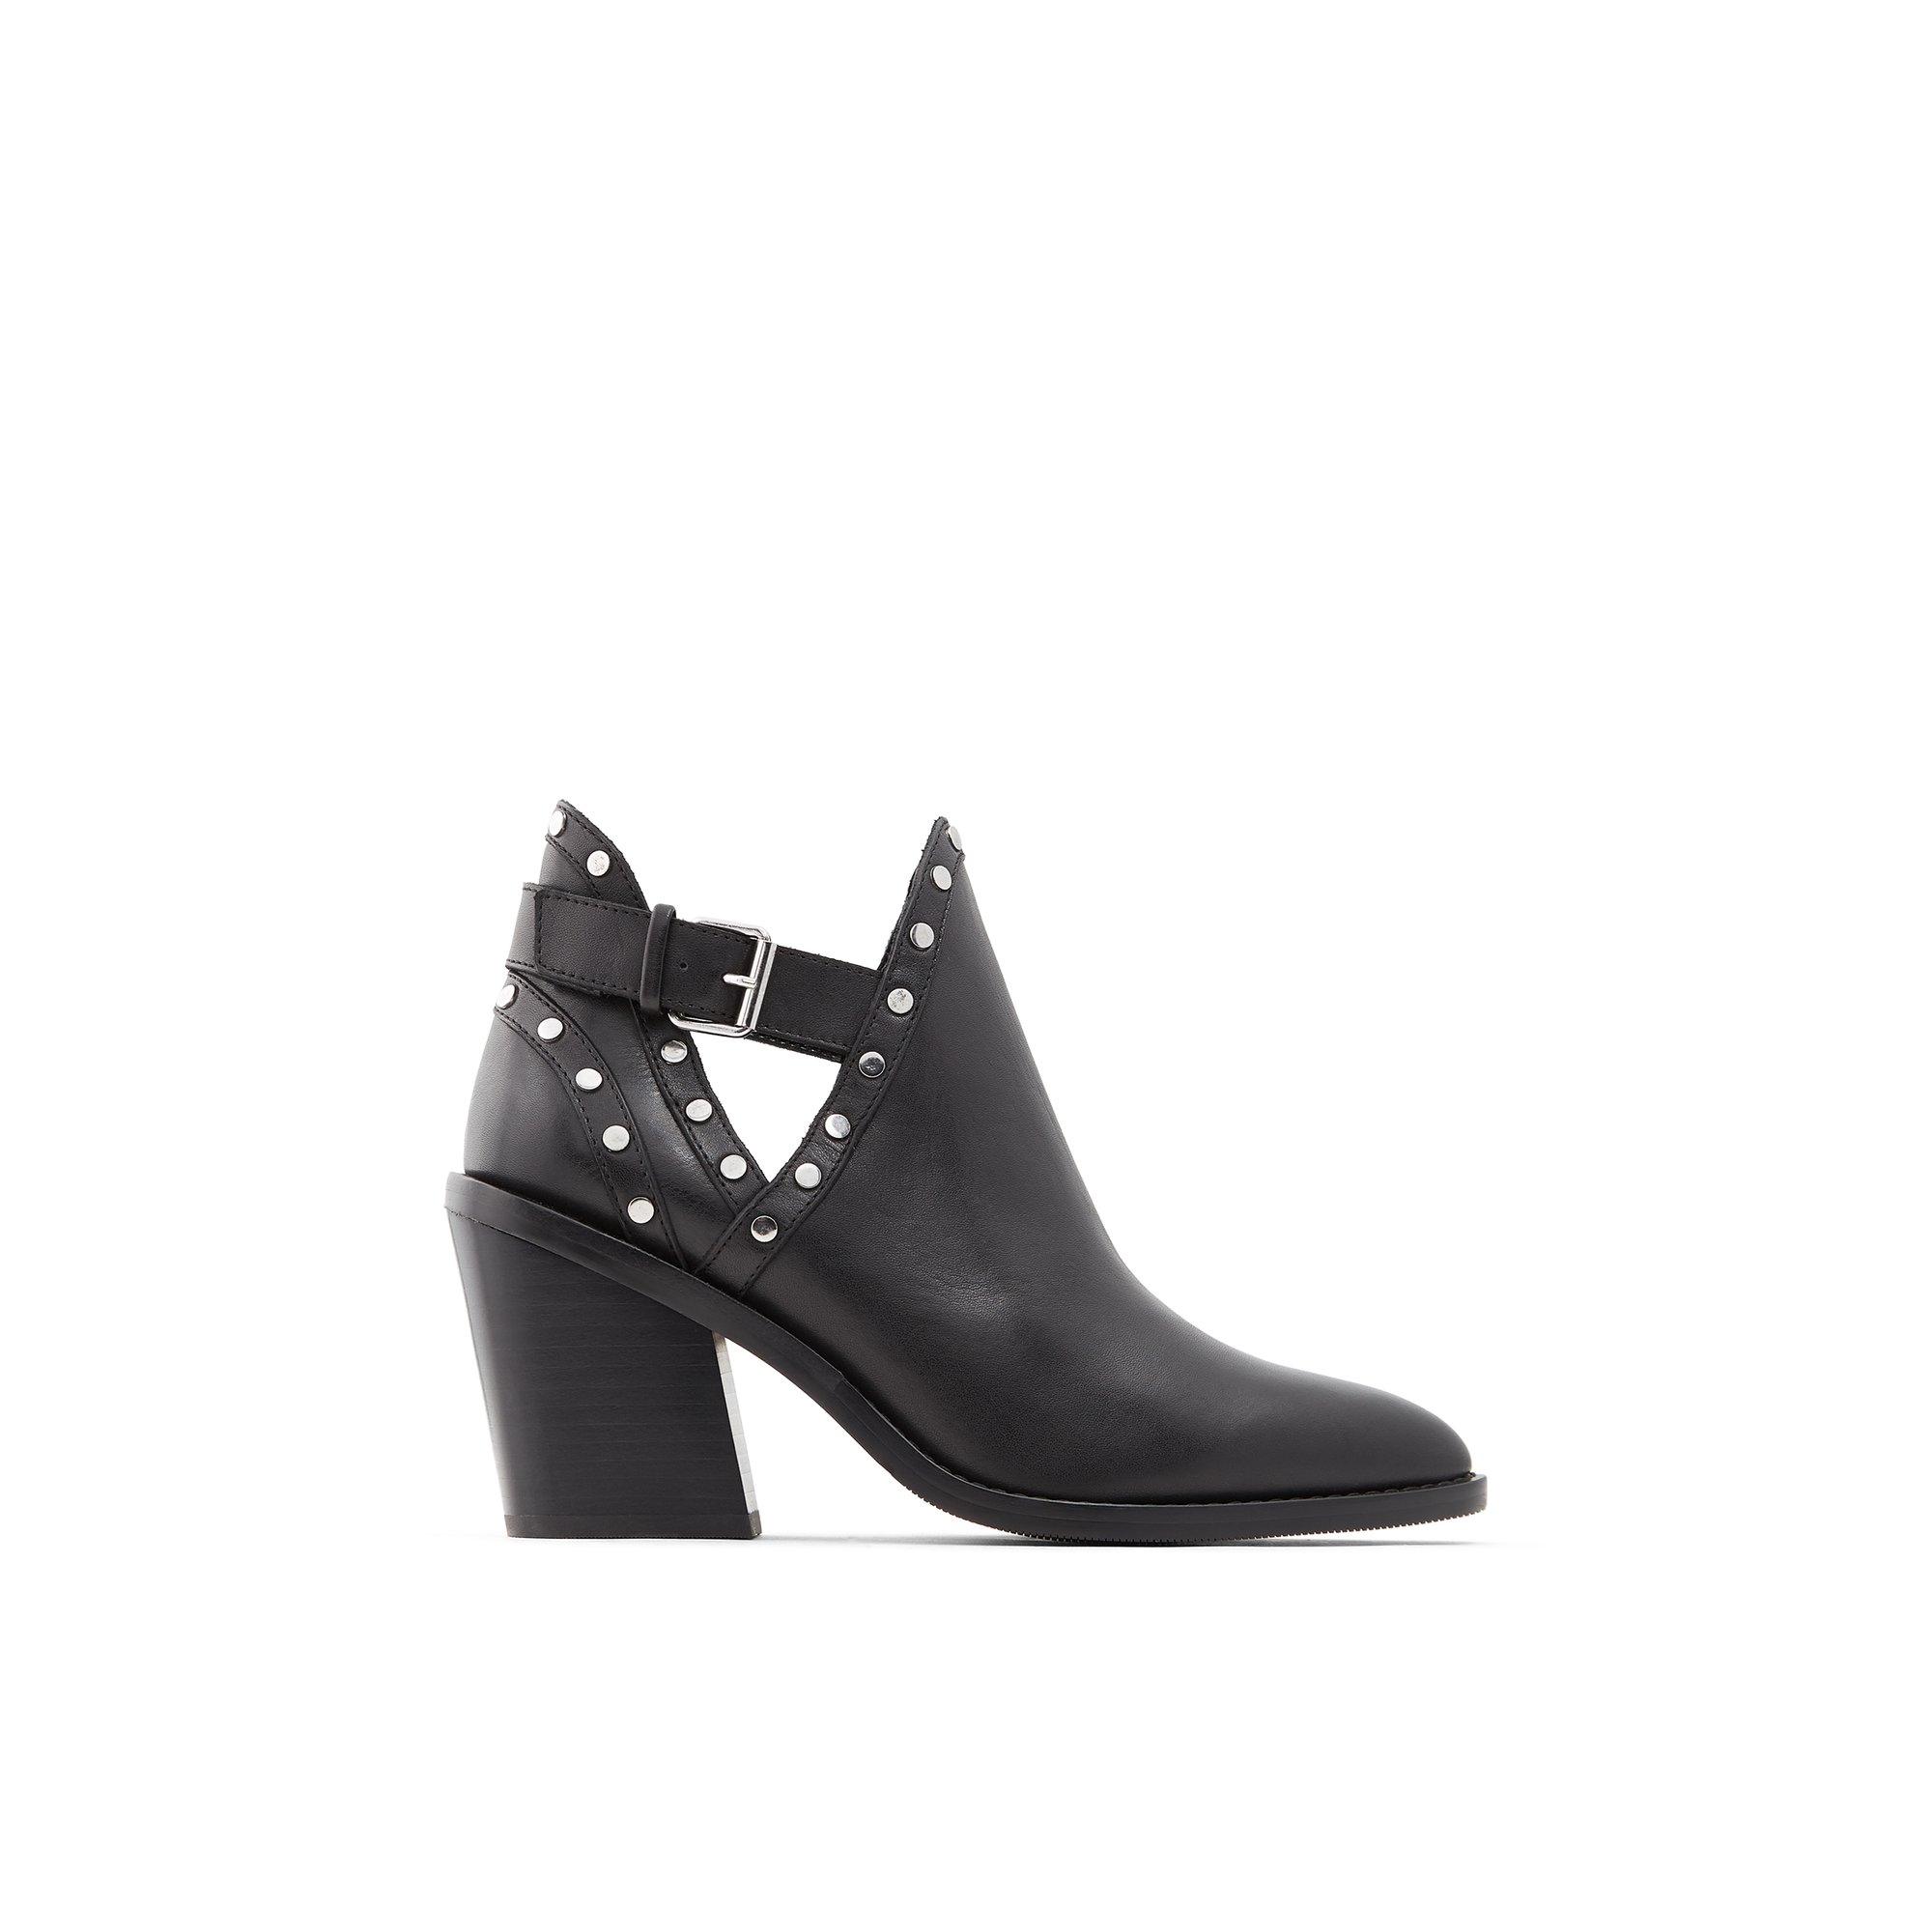 Image of ALDO Eraodia - Women's Ankle Boot - Black, Size 9